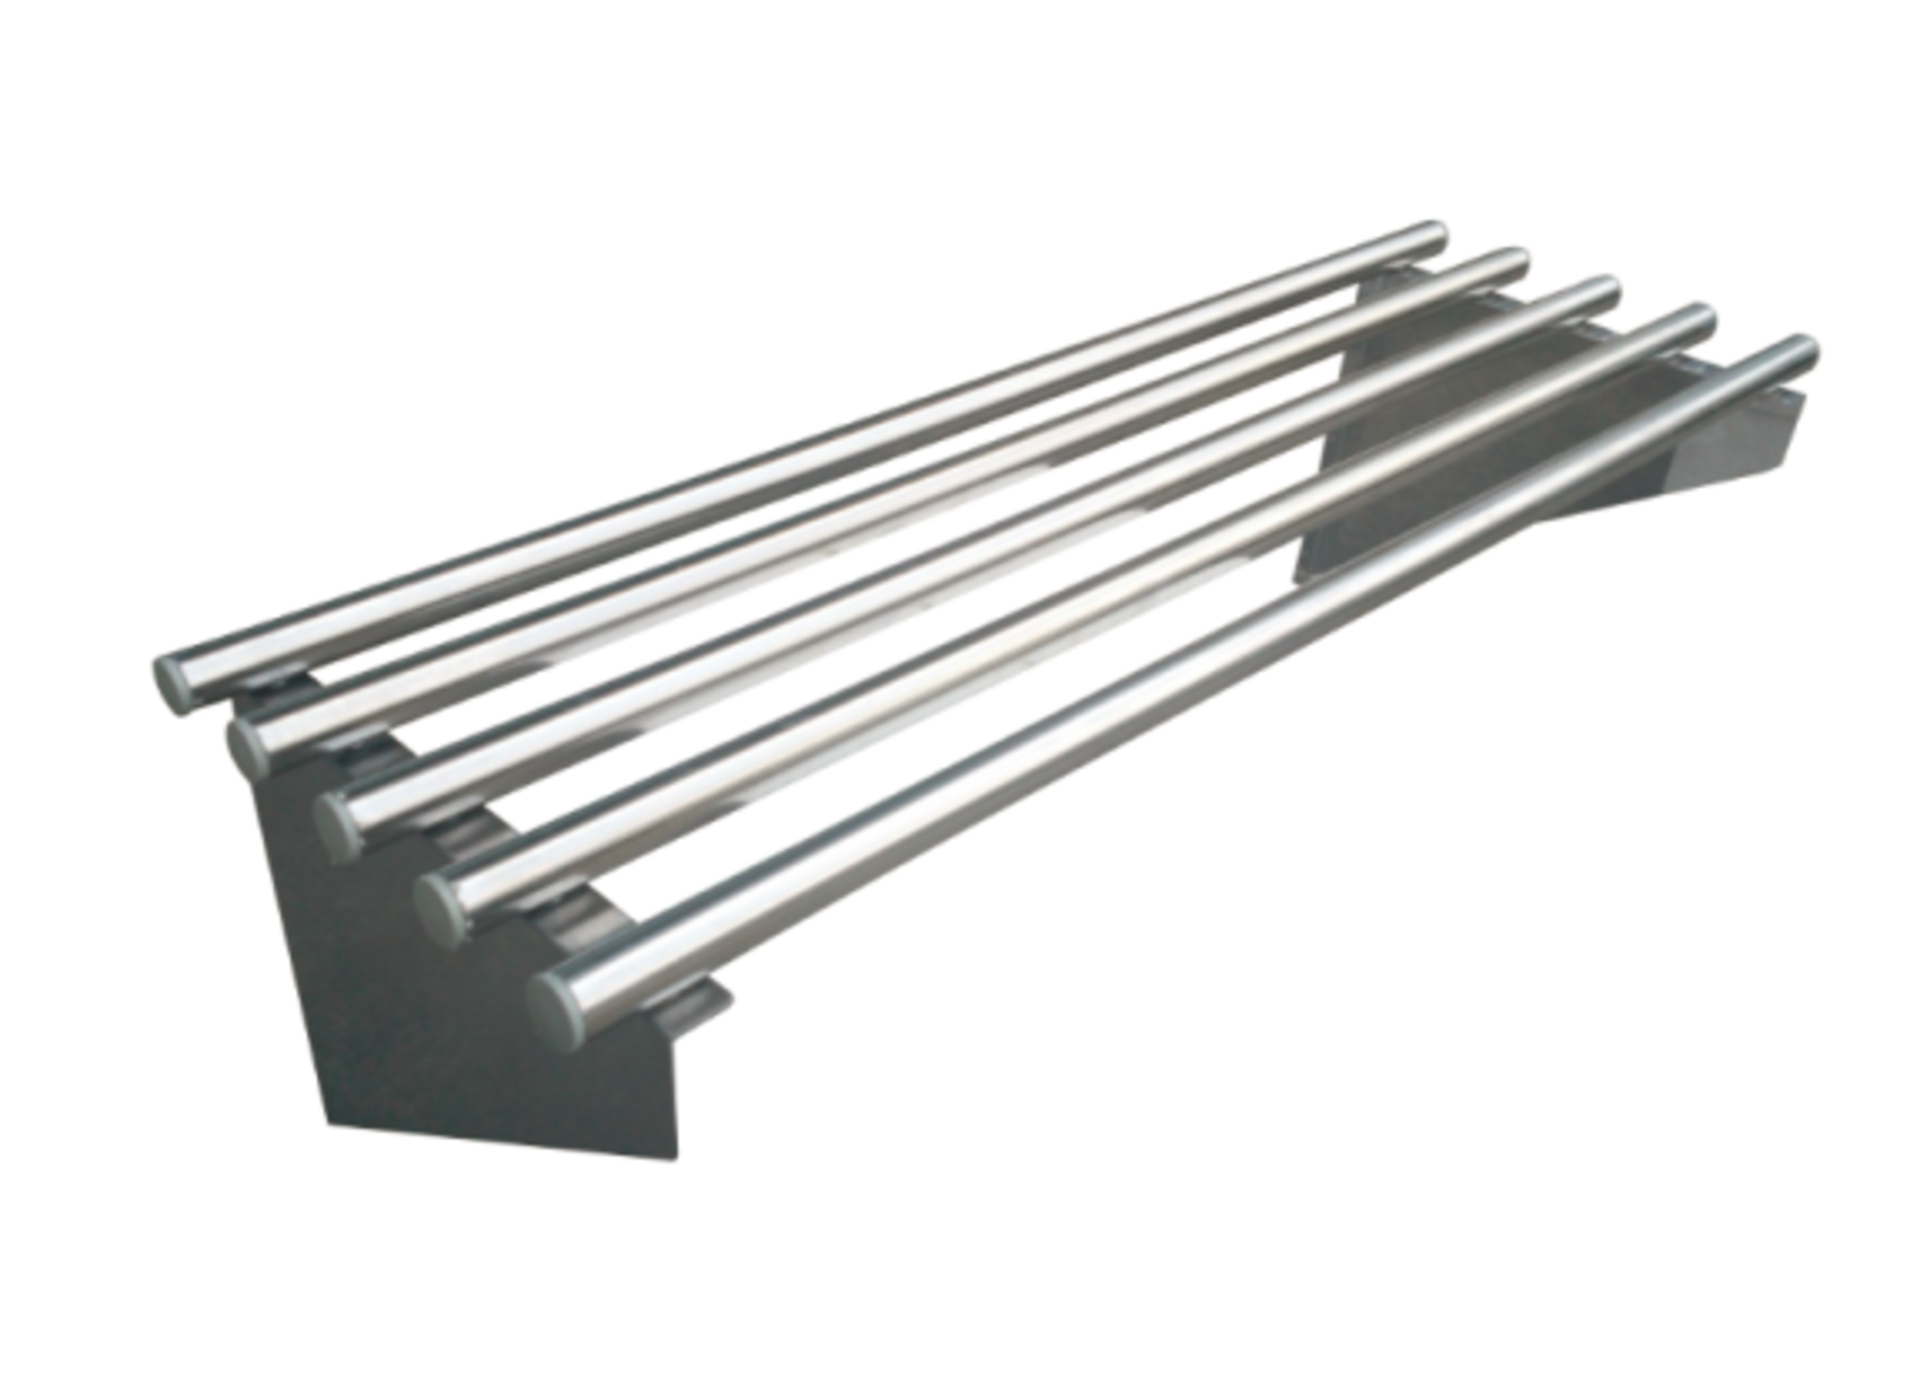 Tubular wall-mounted drainage shelf, 16GA.430S/S brackets 18GA.S/S 1“ diameter tubing, S/S bolts,